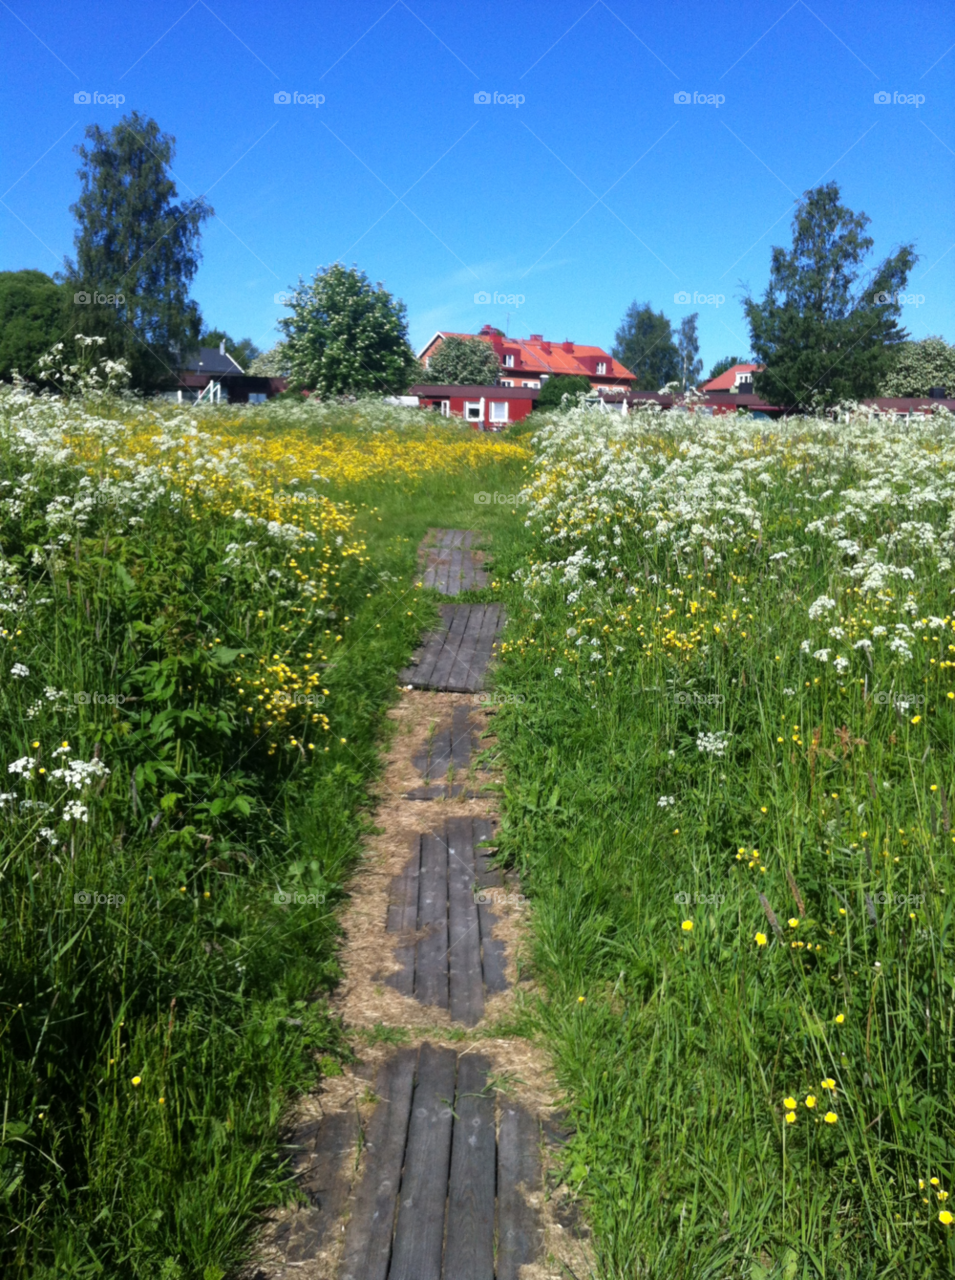 sweden flowers stig summer in sweden by Armann